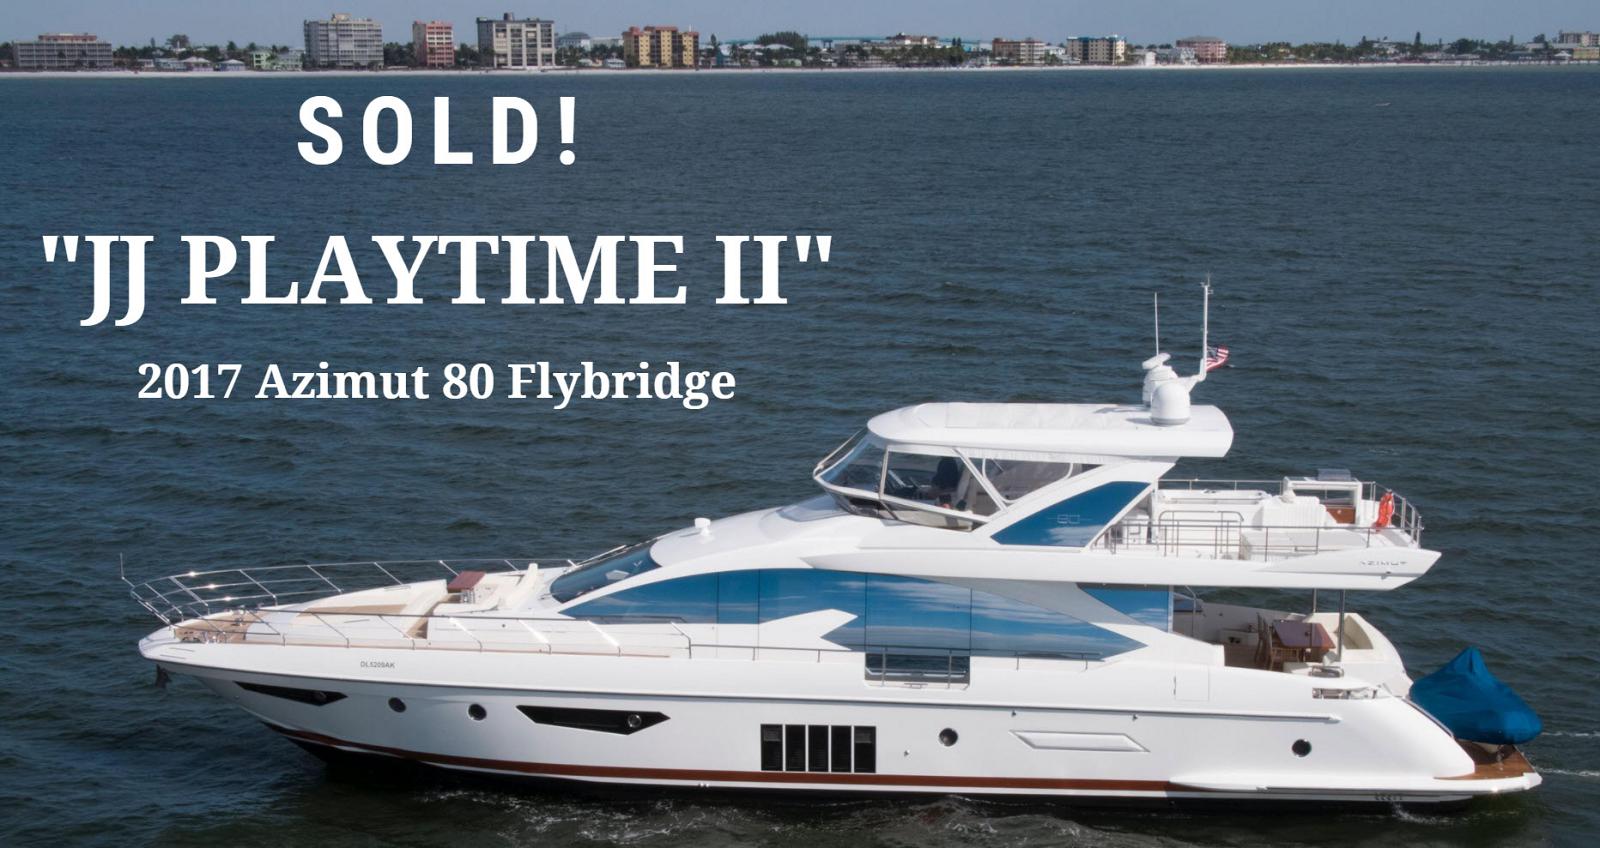 photo of Azimut Yachts 80 Flybridge JJ Playtime II Sold By United